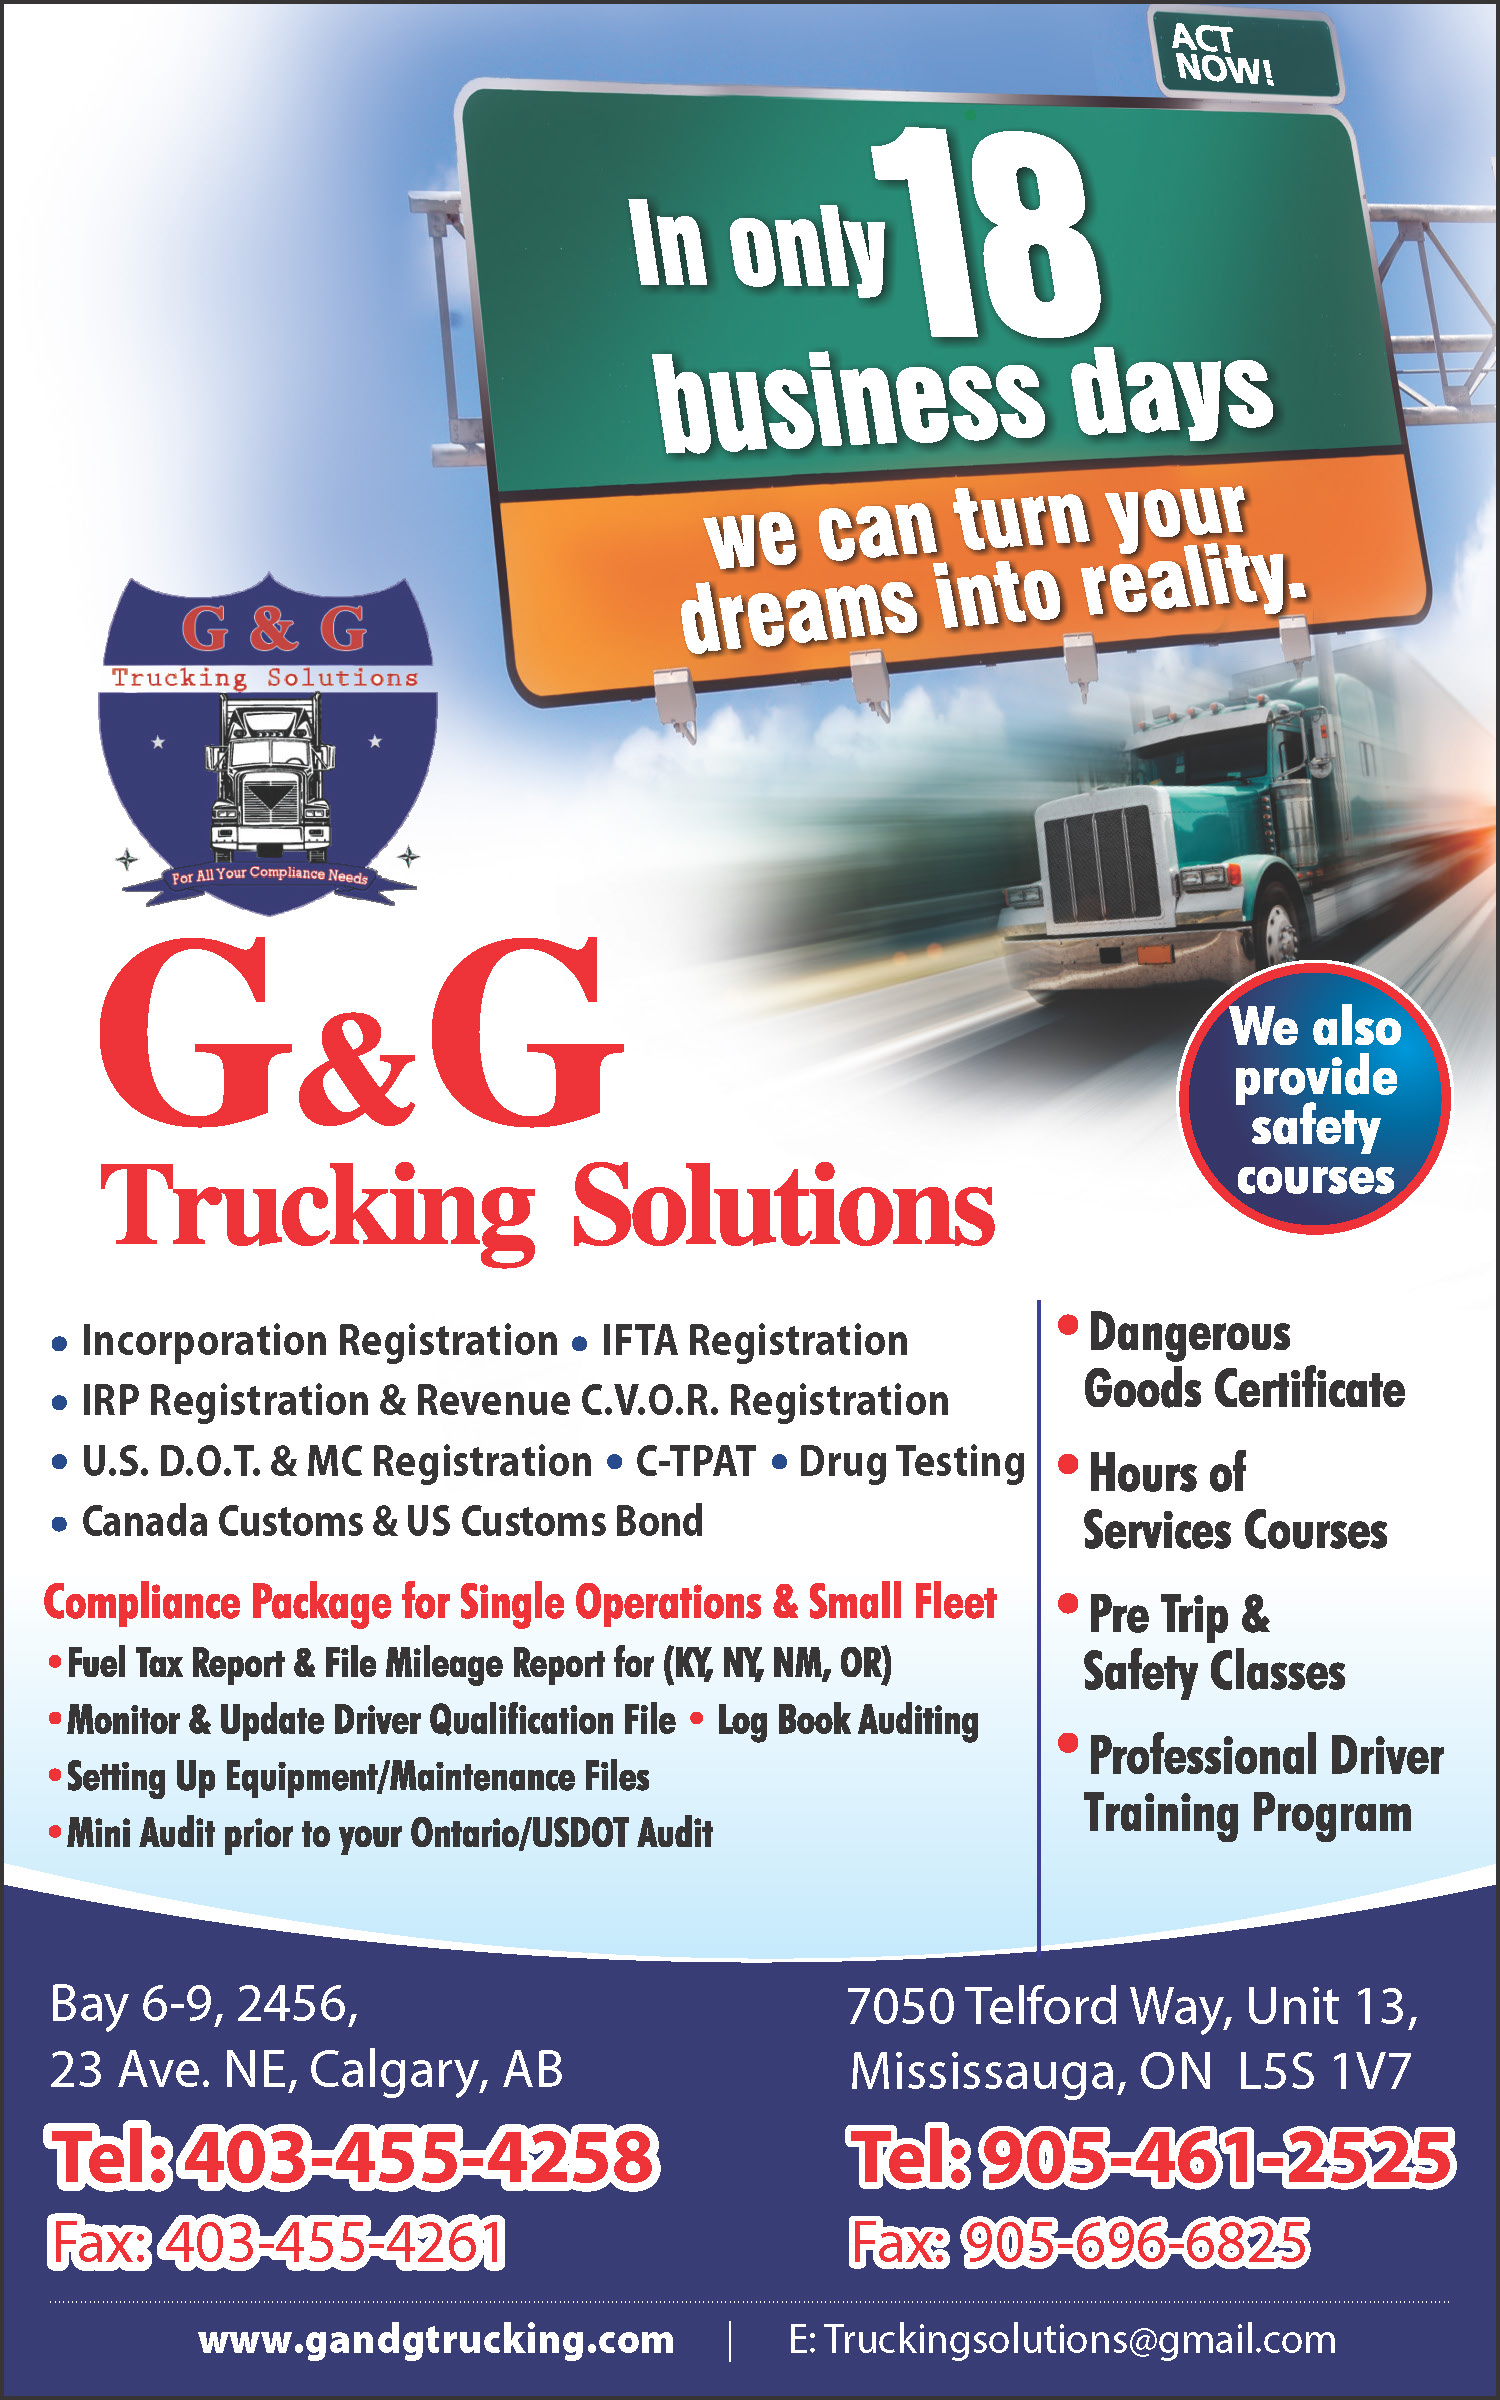 gg-trucking-solutions-o1kmdb4.jpeg